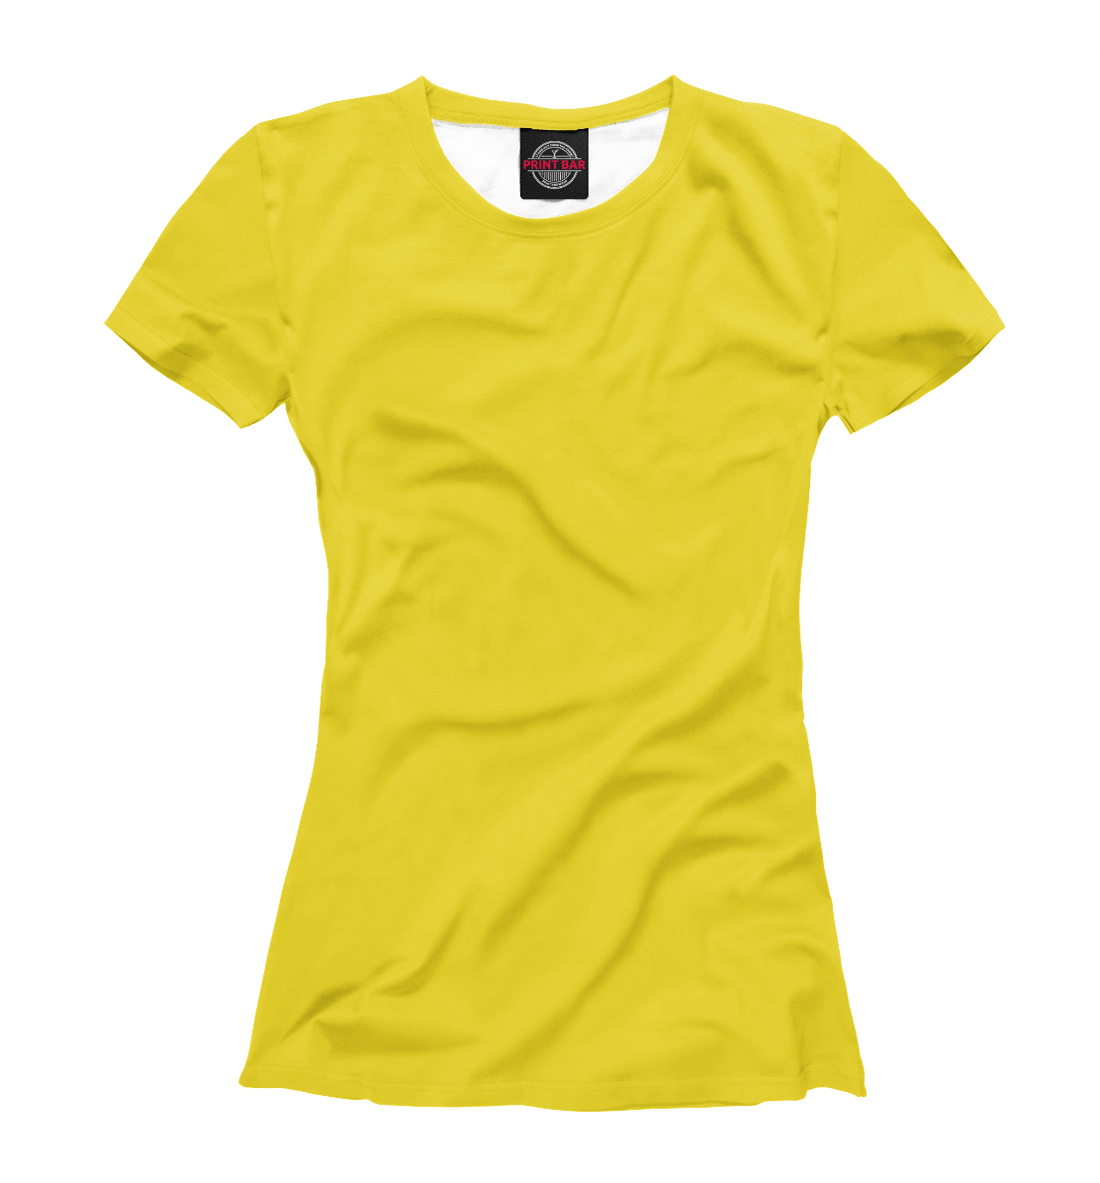 Футболка Цвет Рапсово-желтый для женщин, артикул: CLR-692519-fut-1mp